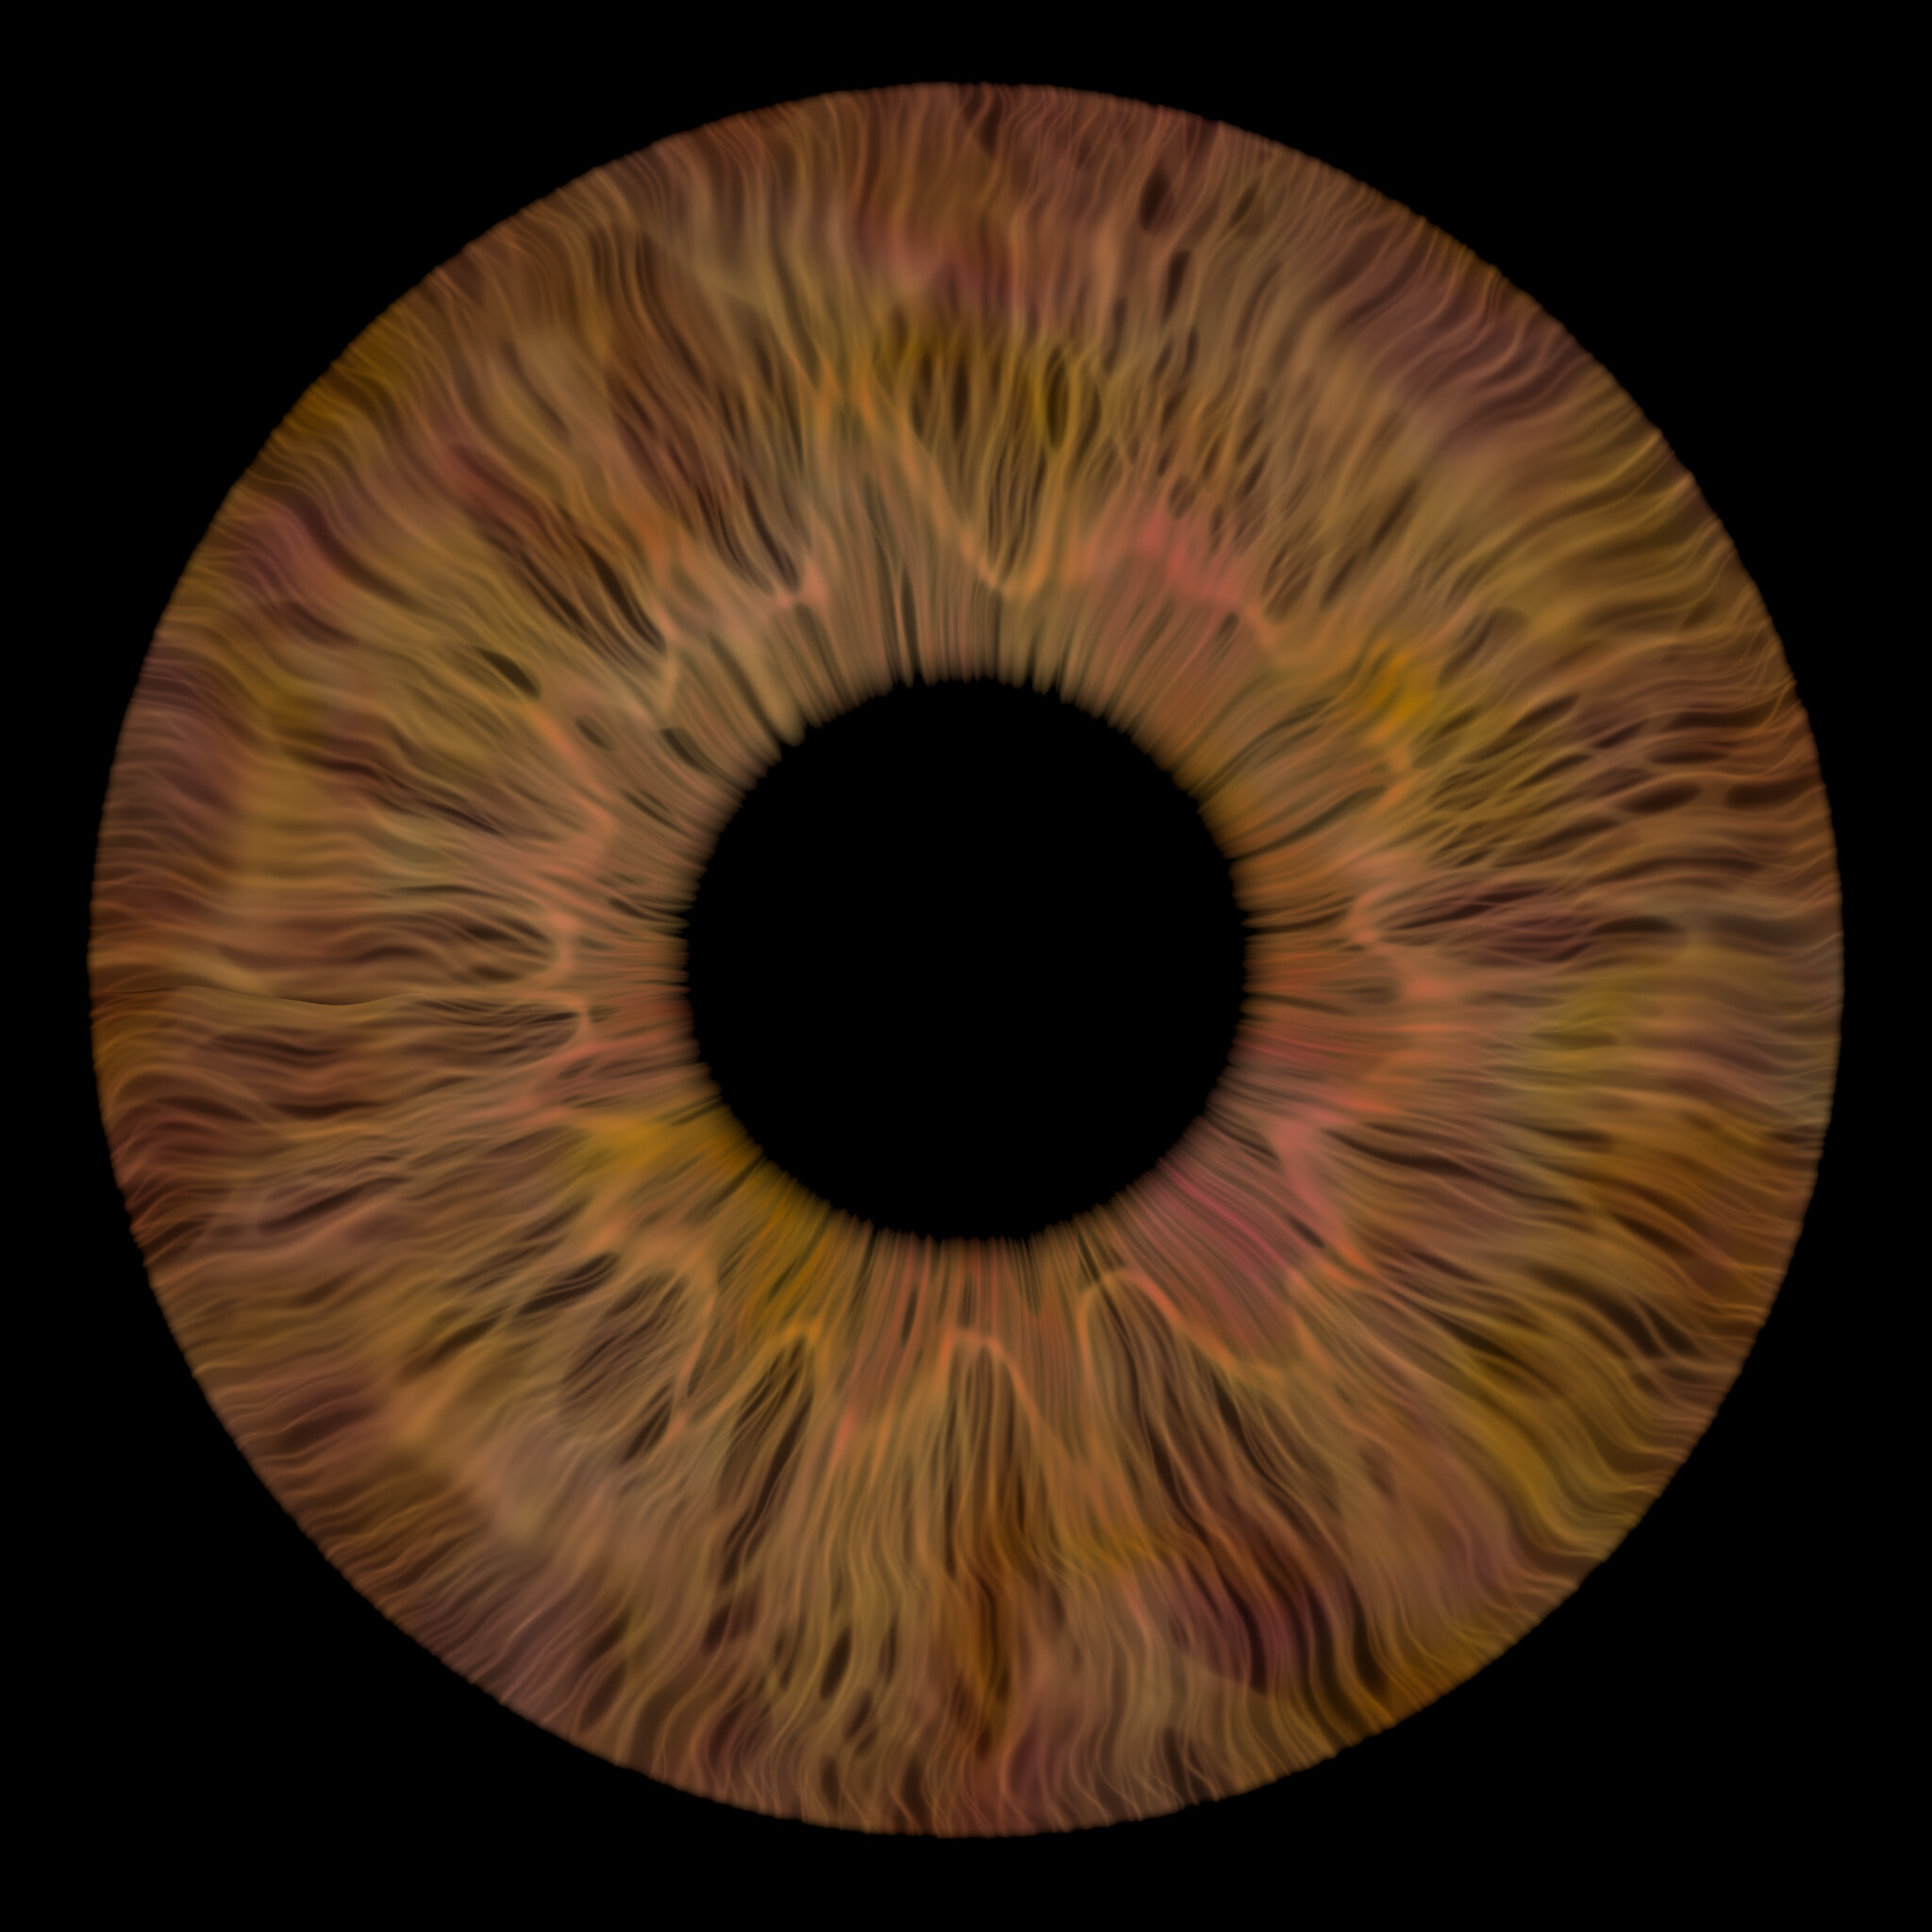 iris eye texture